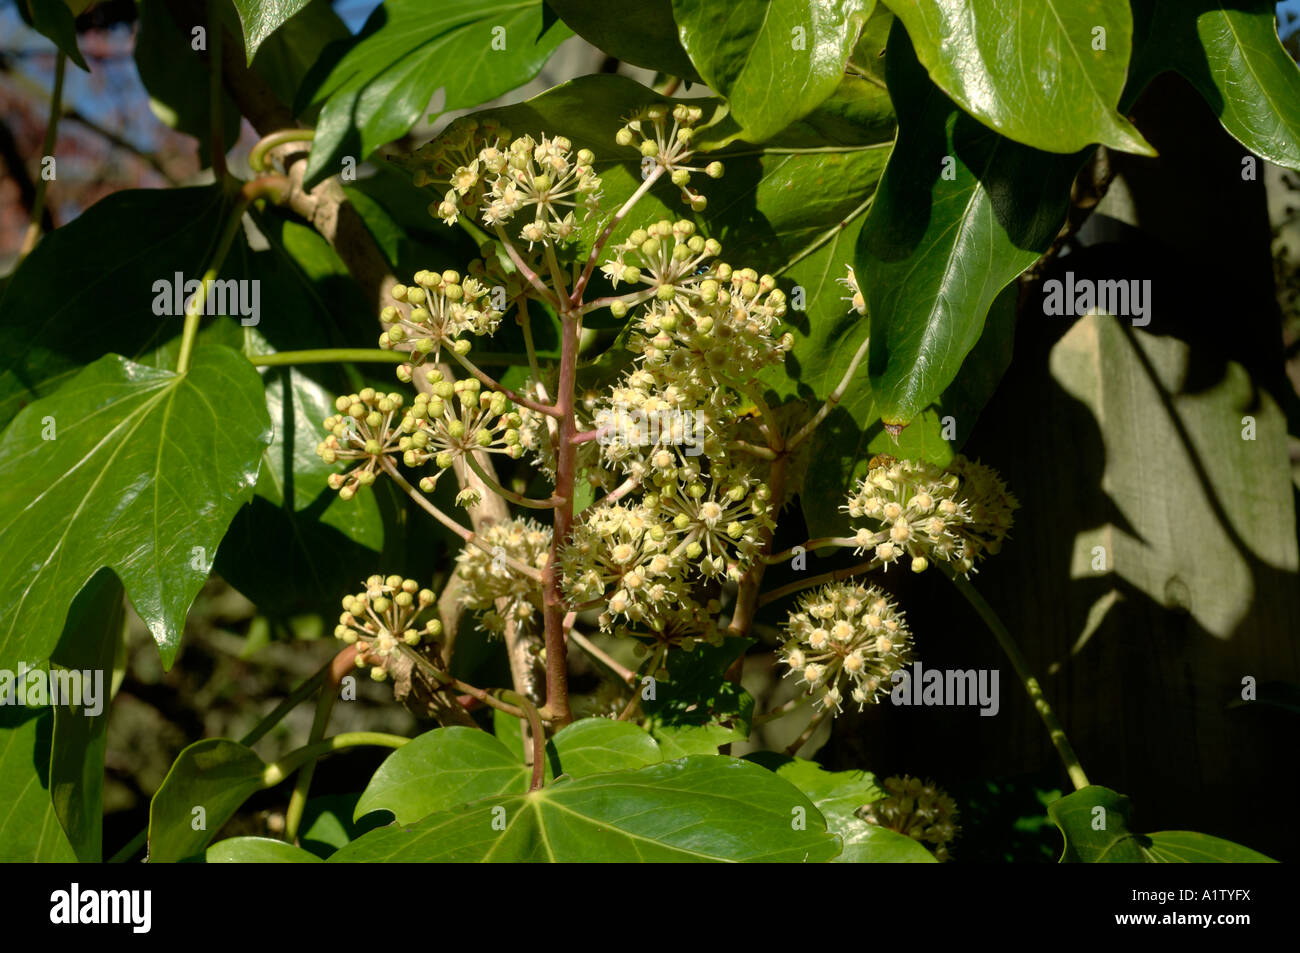 Fatshedera lizei an climbing ivy like plant flowering Stock Photo